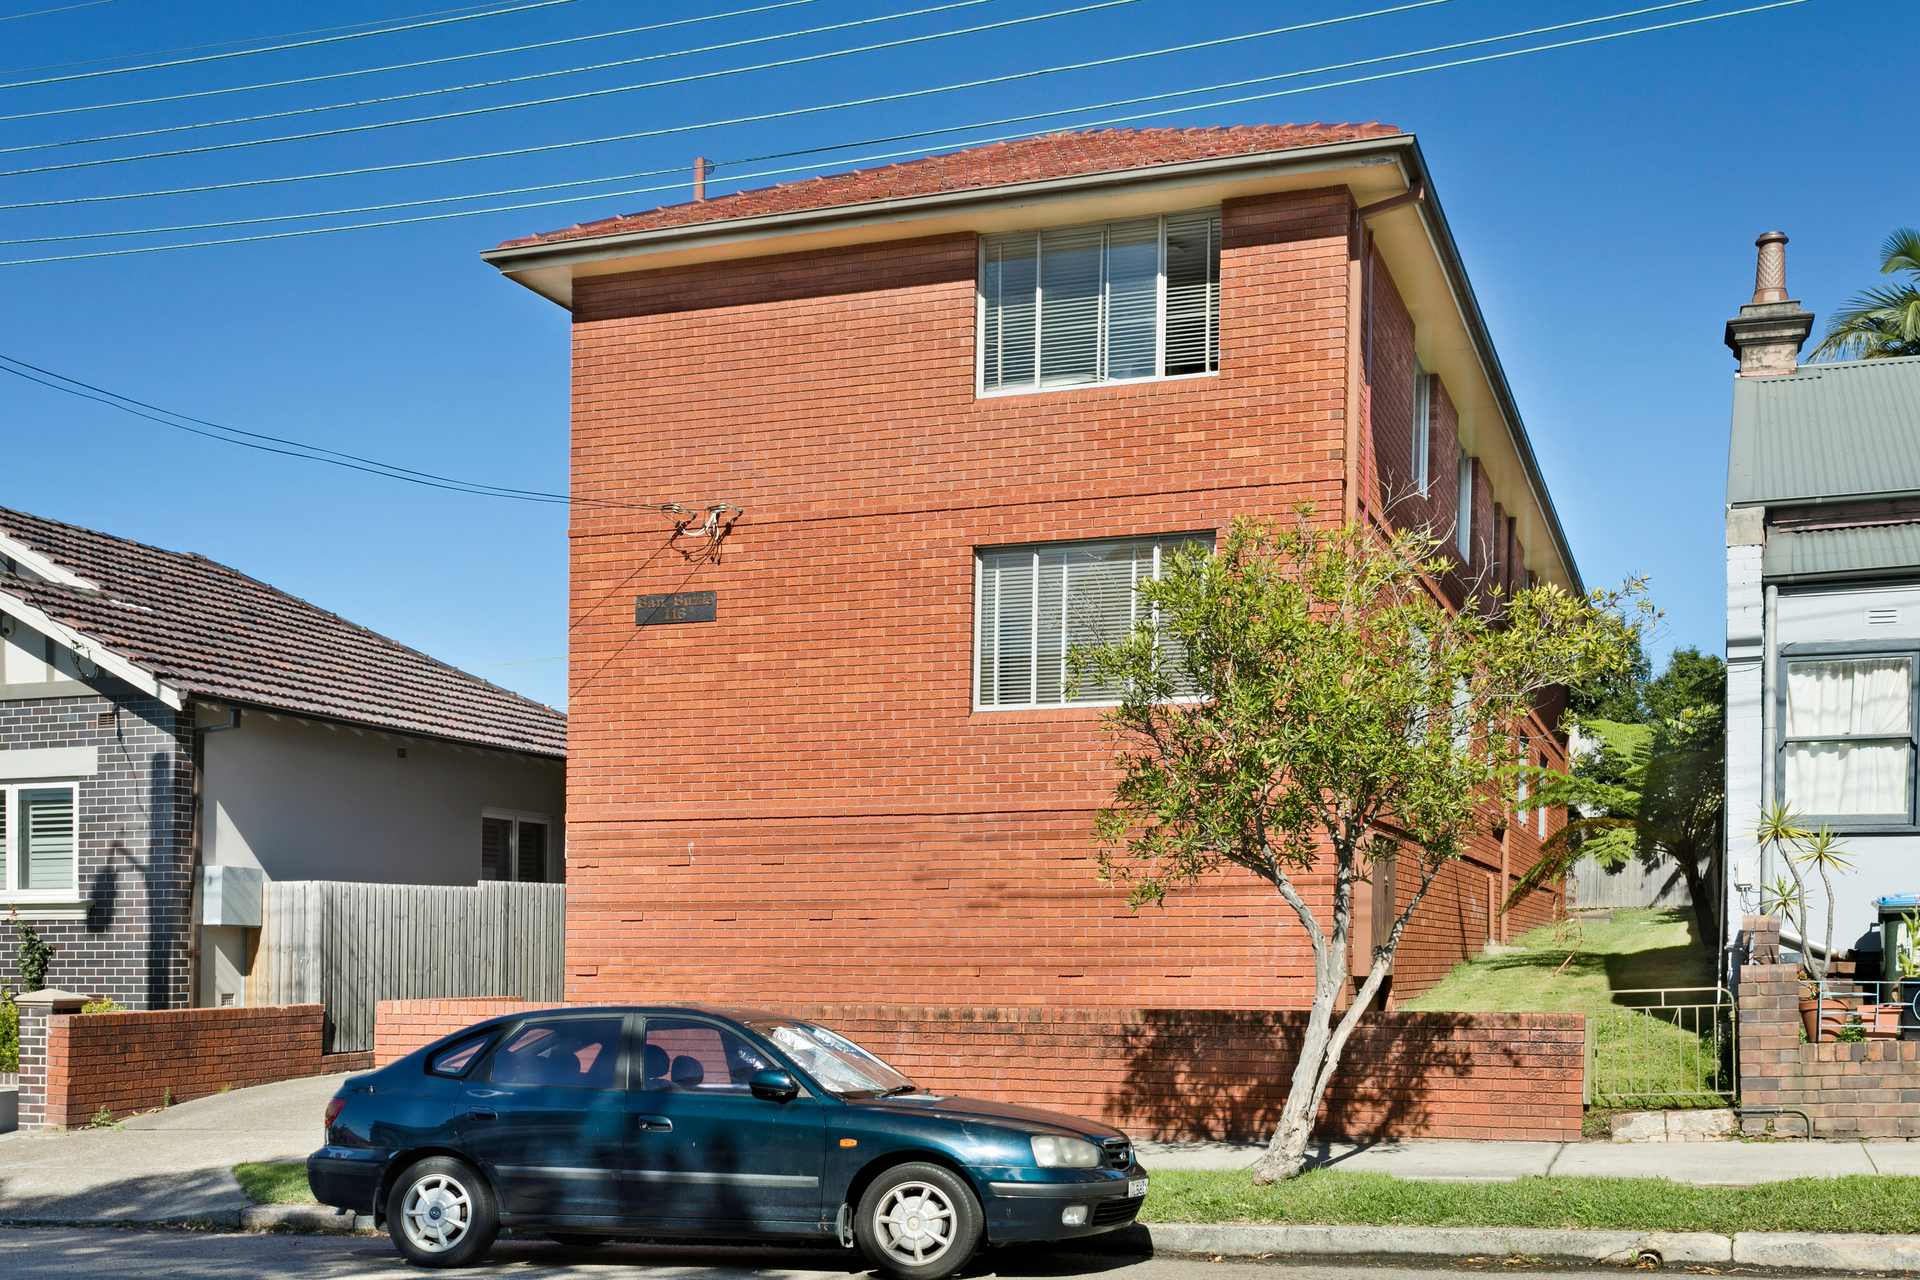 2/116 Moore Street, Leichhardt, NSW 2040, 1 chambres, 1 salles de bain, Apartment